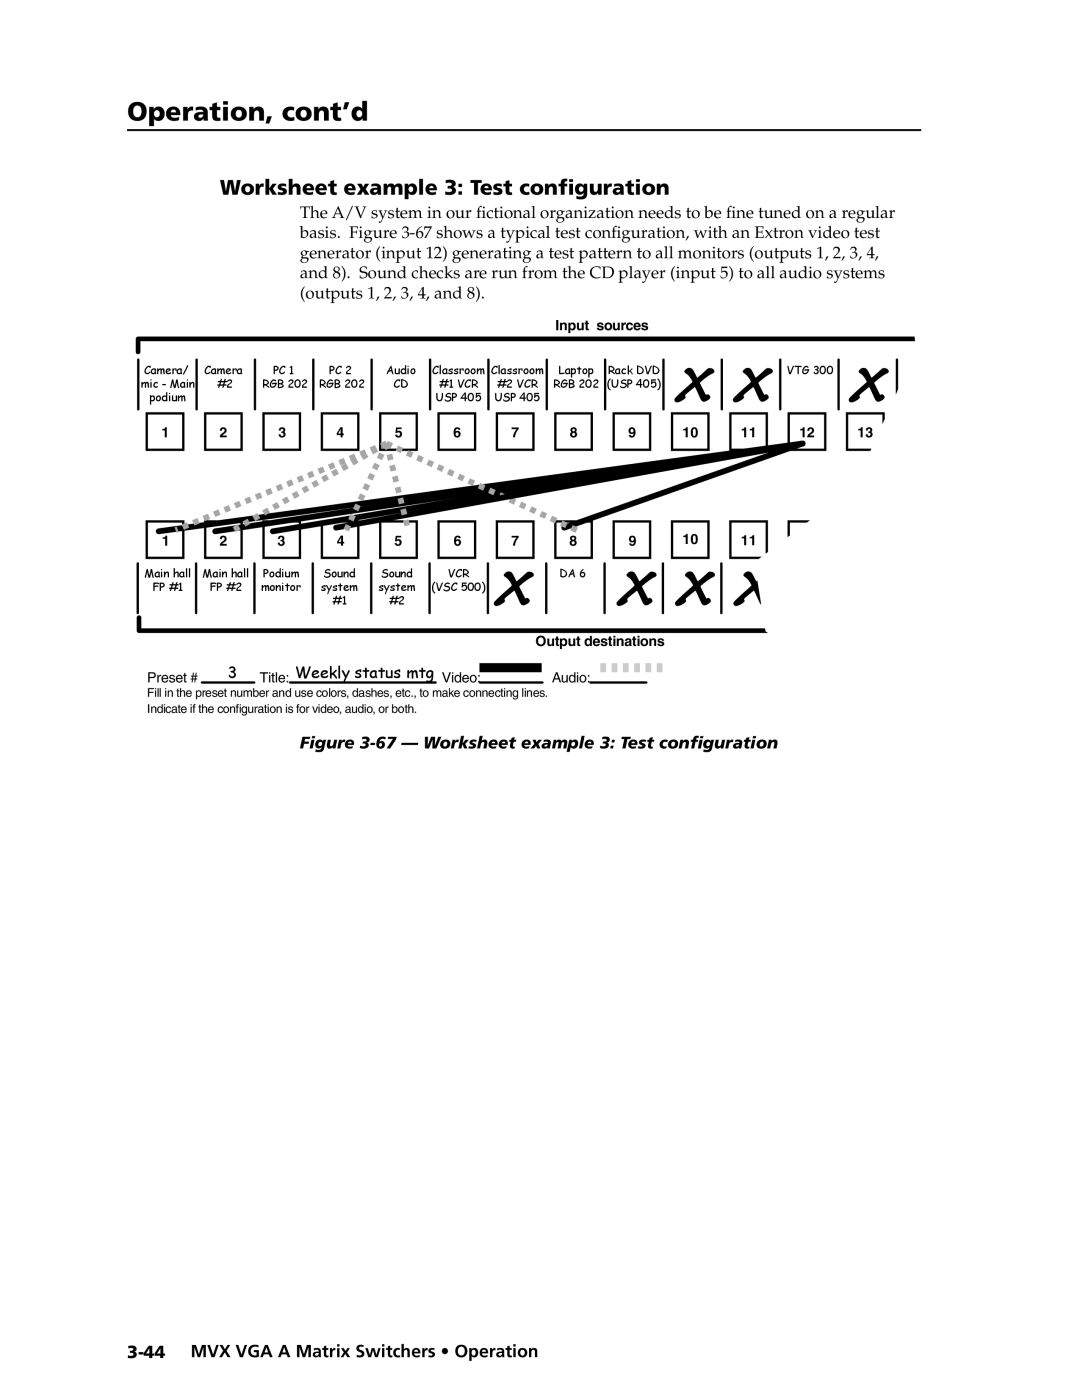 Extron electronic manual Preliminary, Worksheet example 3 Test configuration, MVX VGA A Matrix Switchers Operation 